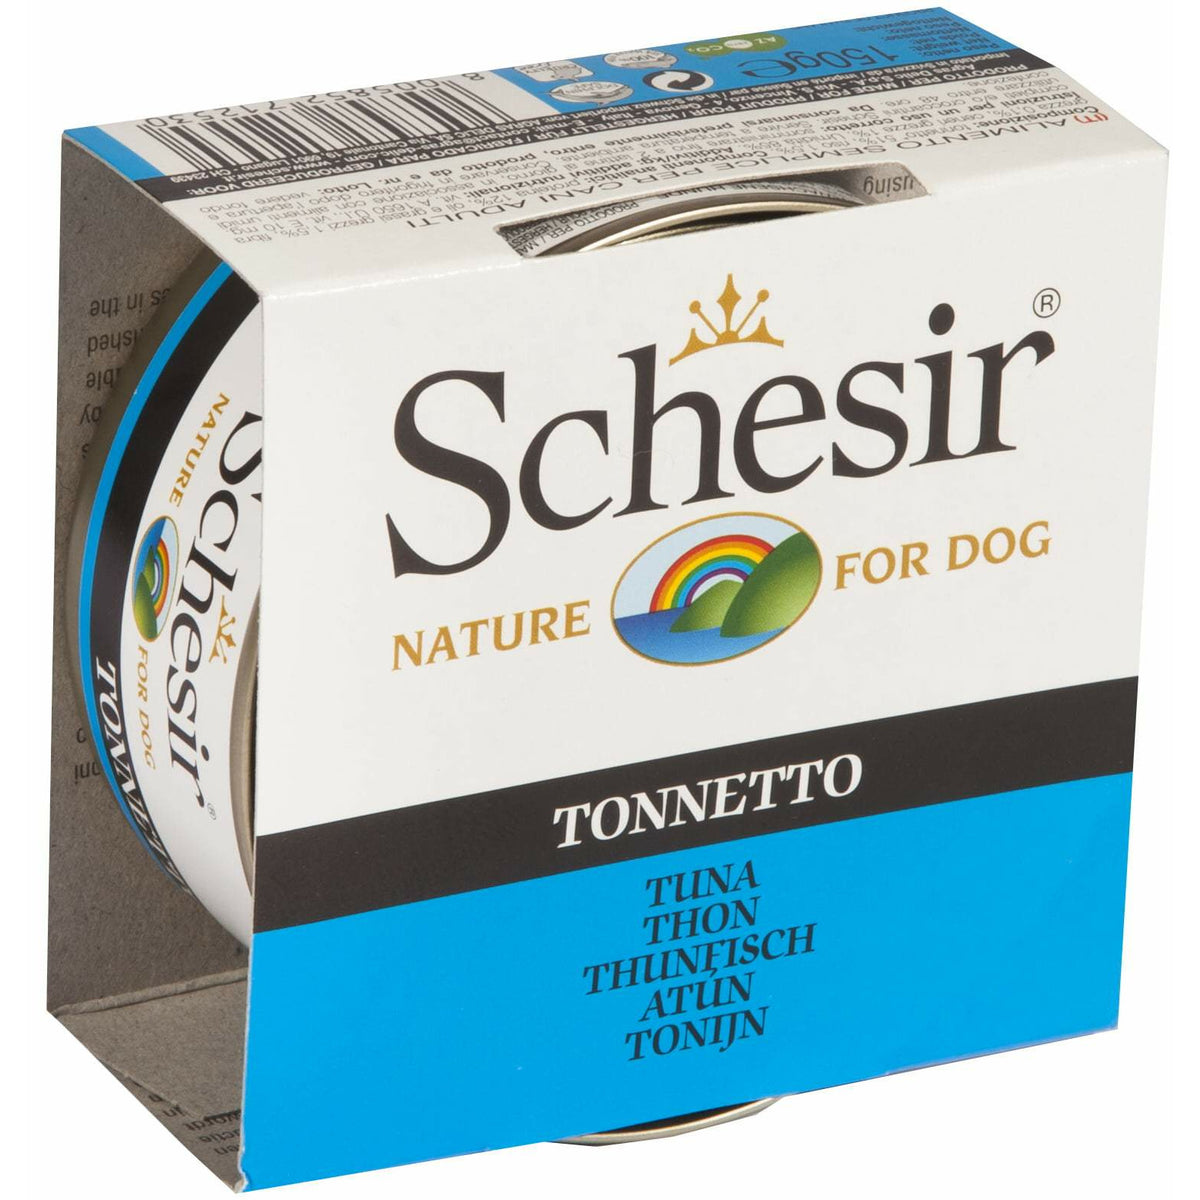 Schesir Tuna Entrée (150g) - Canned Dog Food